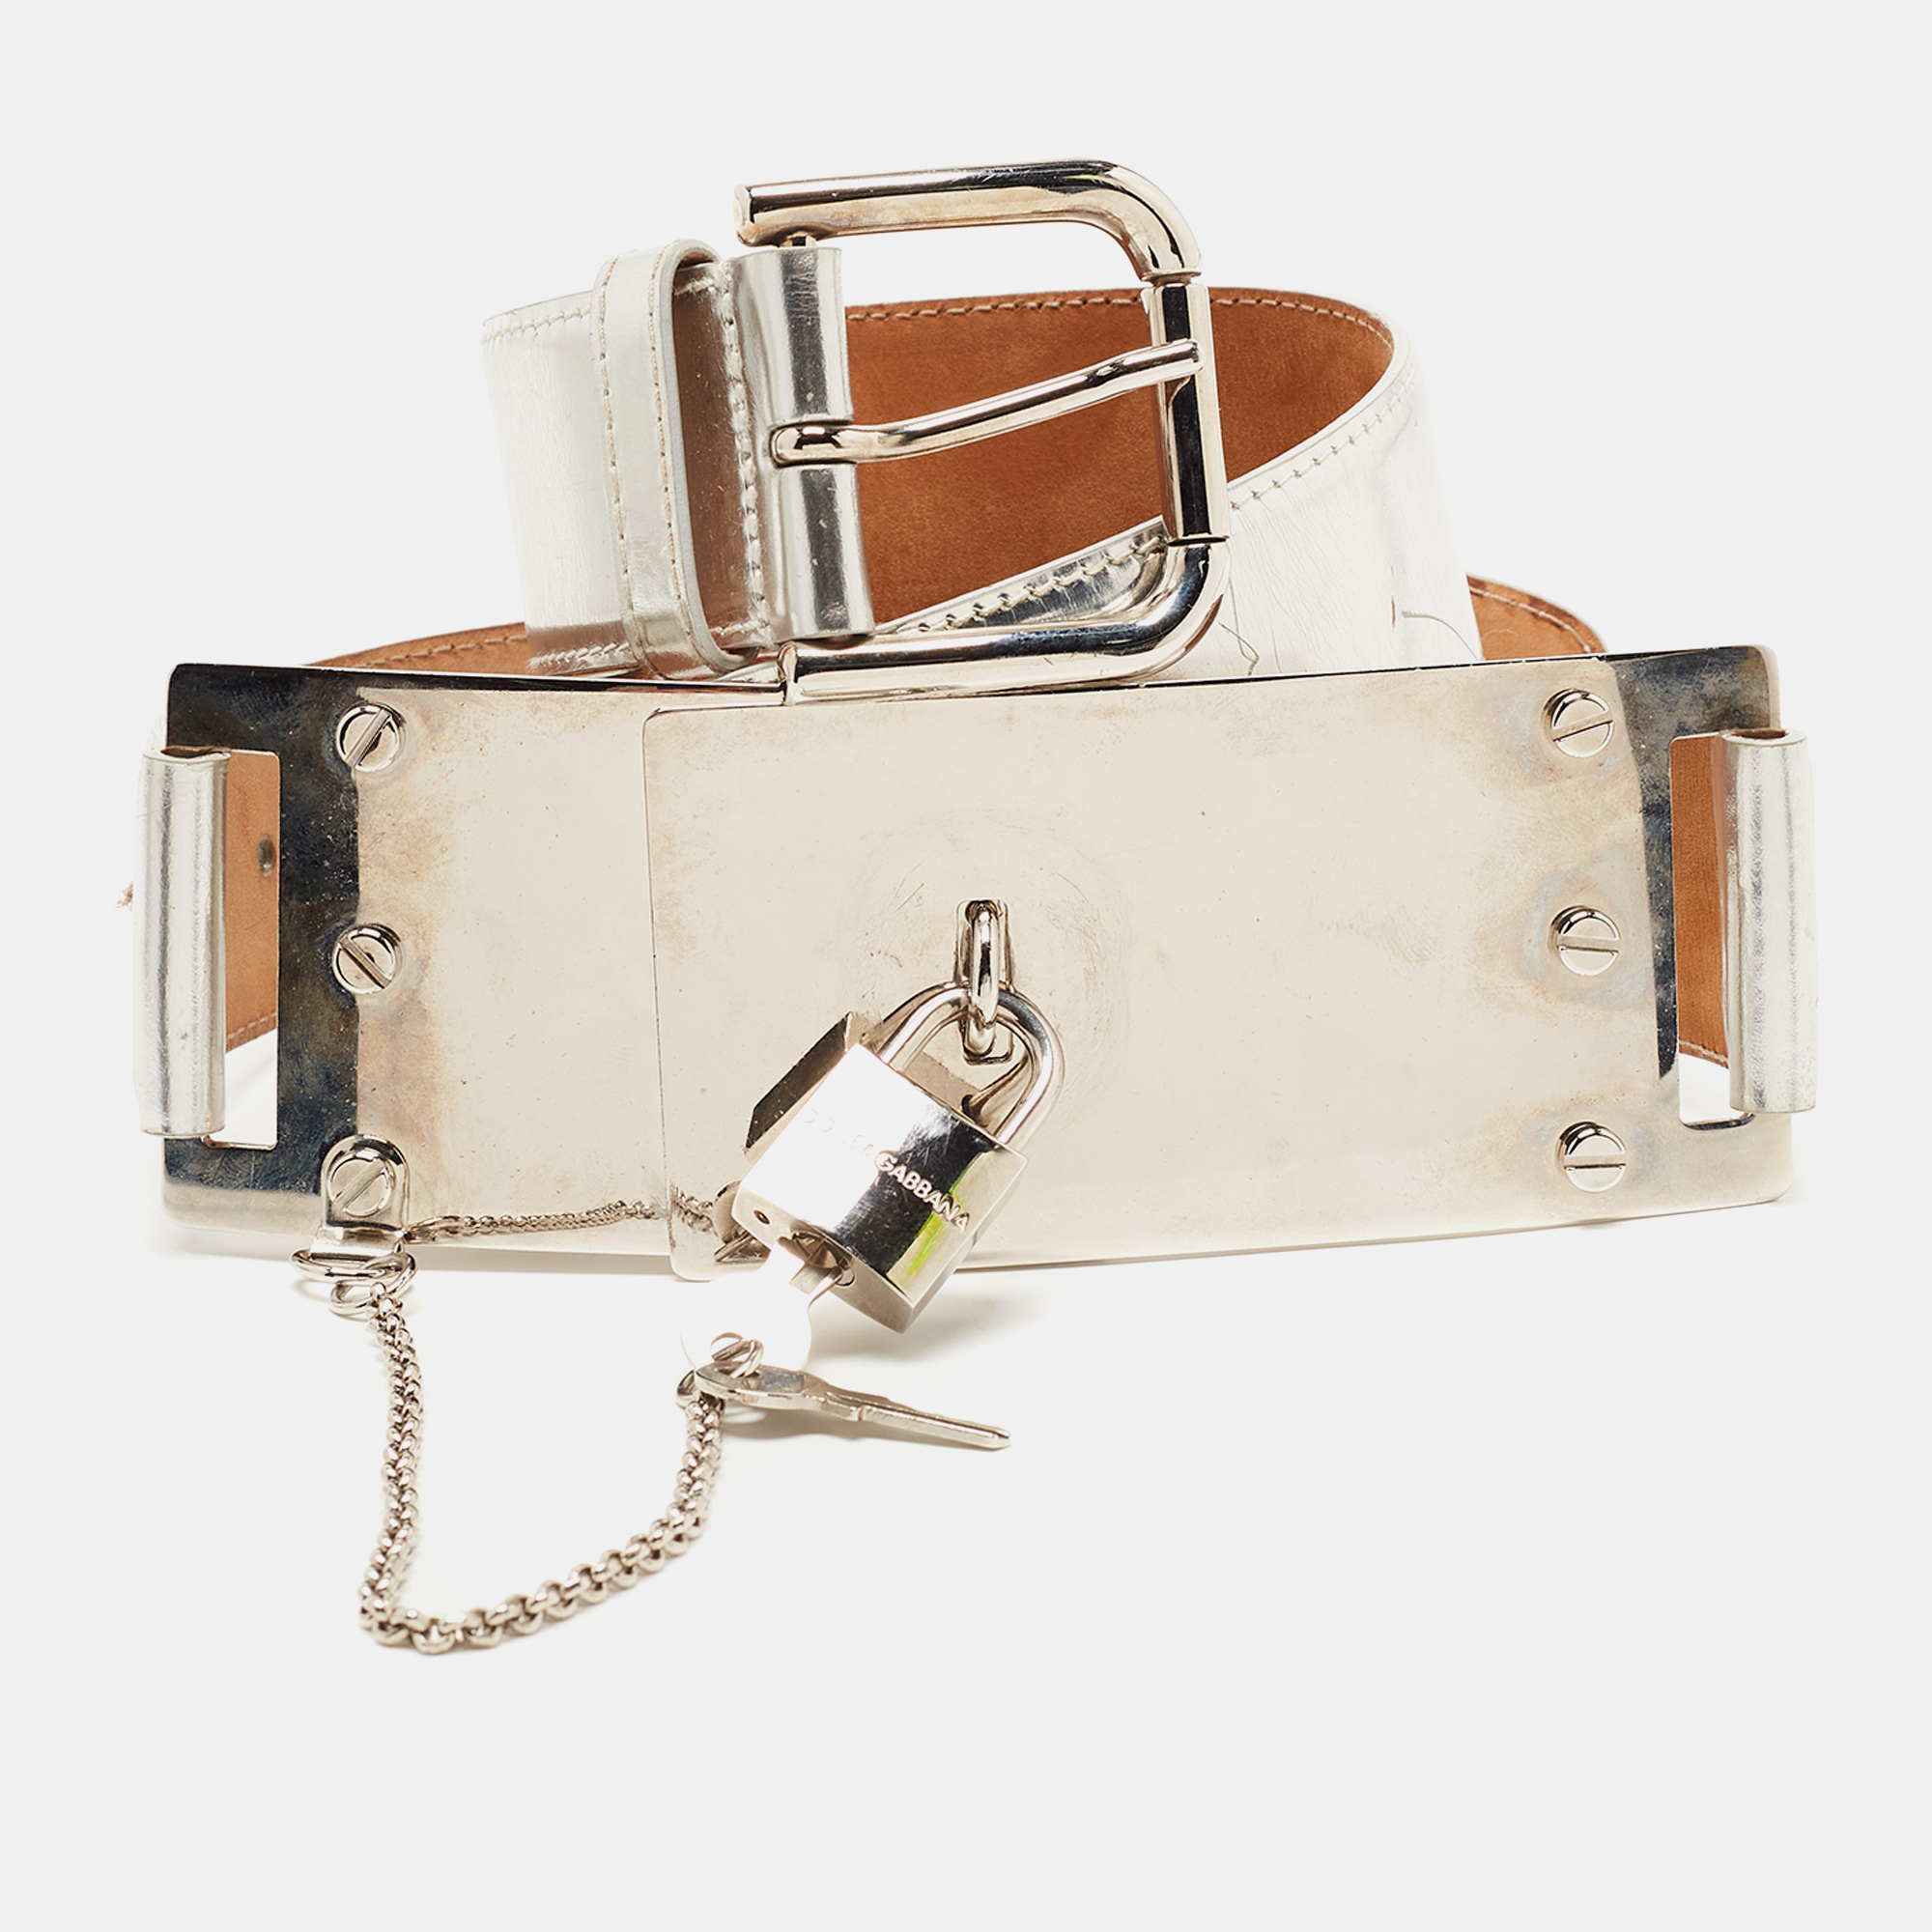 Dolce & Gabbana Silver Leather Padlock Metal Waist Belt 90CM